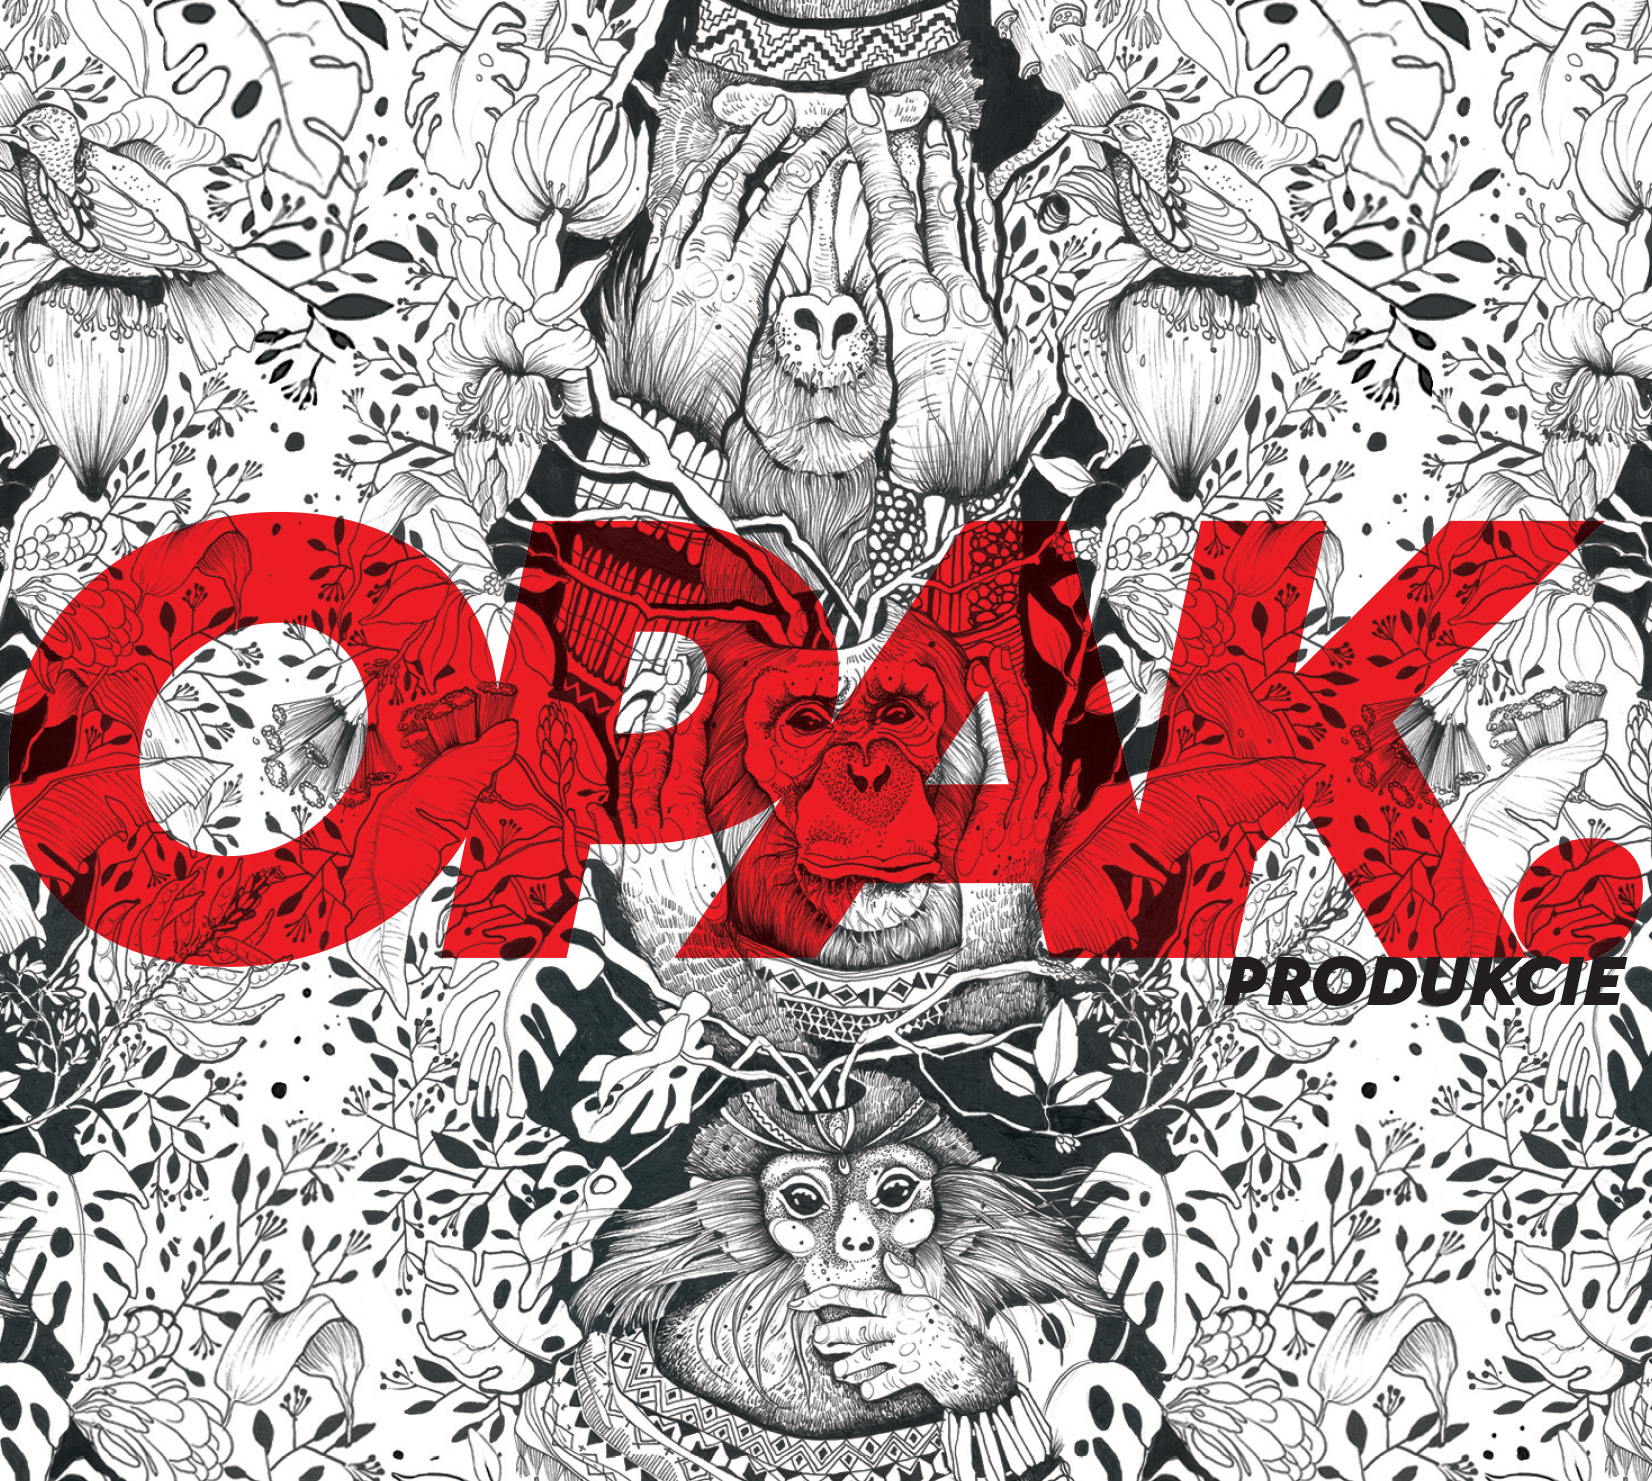 OPAK - Produkcie (cd)